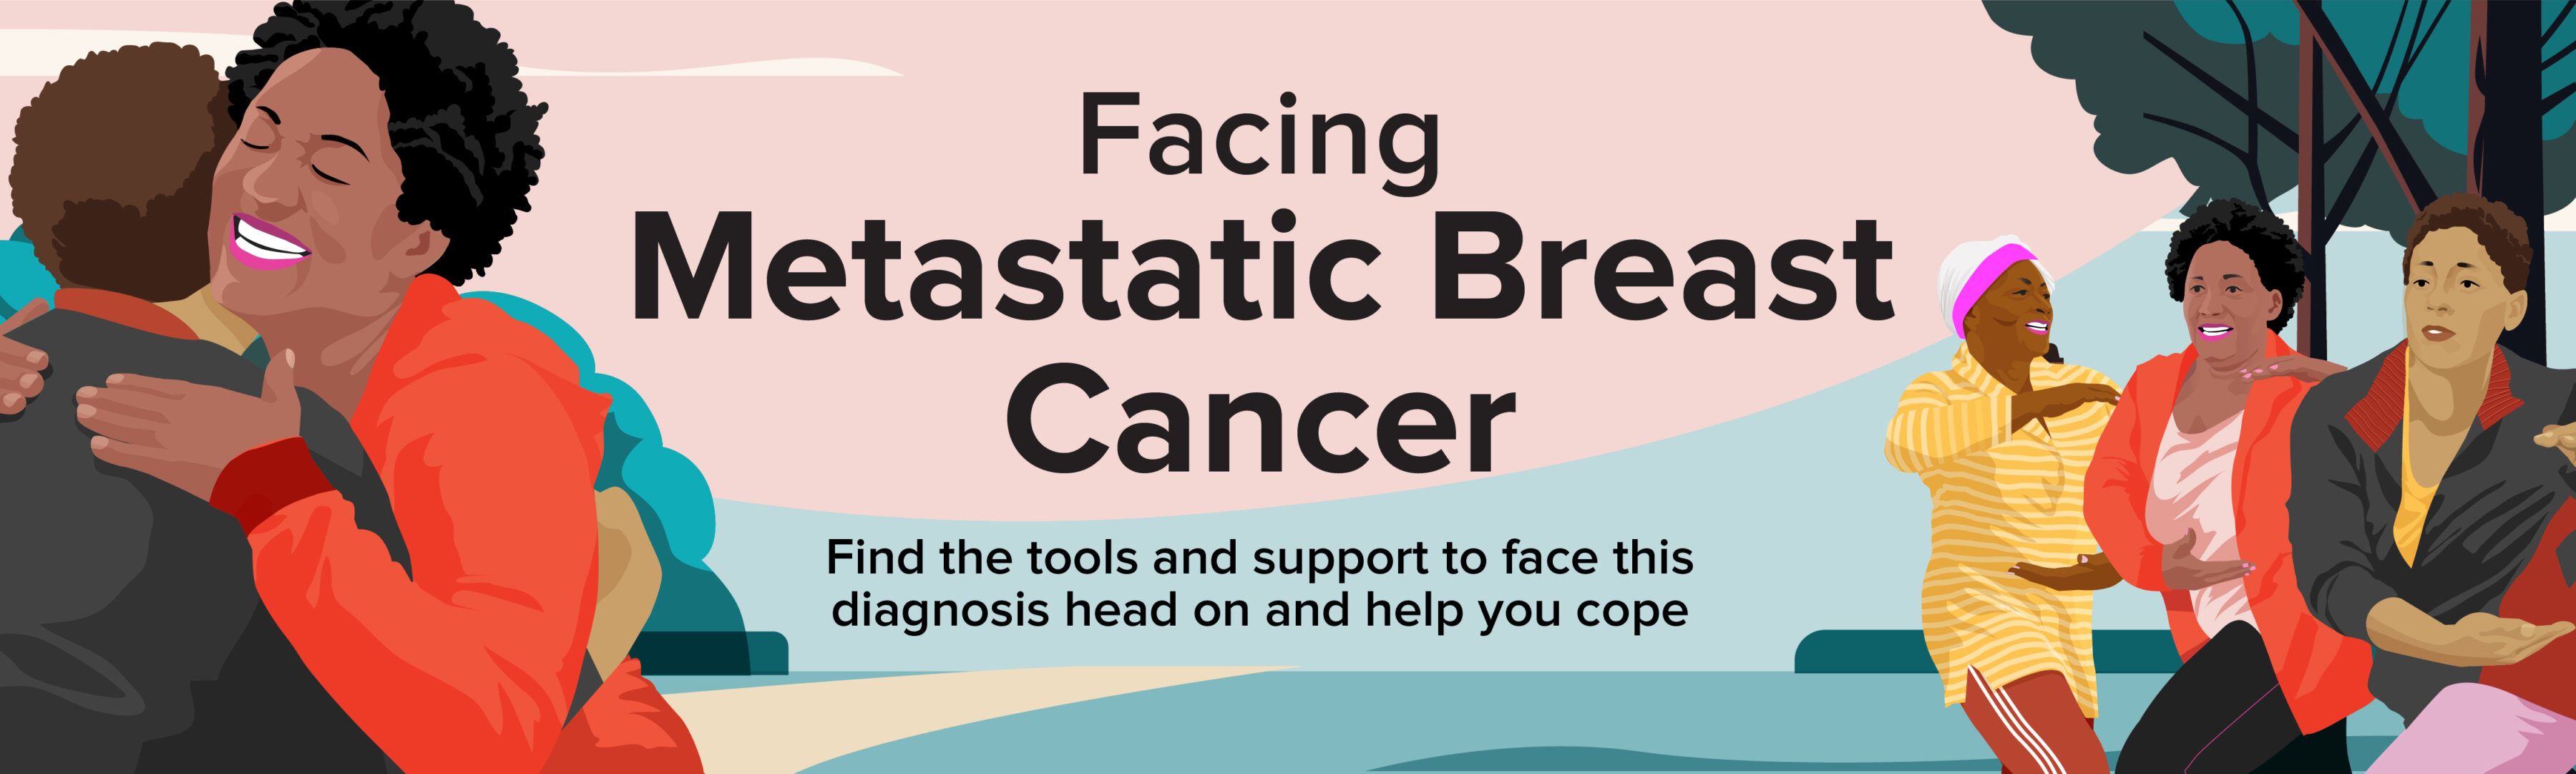 Facing Metastatic Breast Cancer